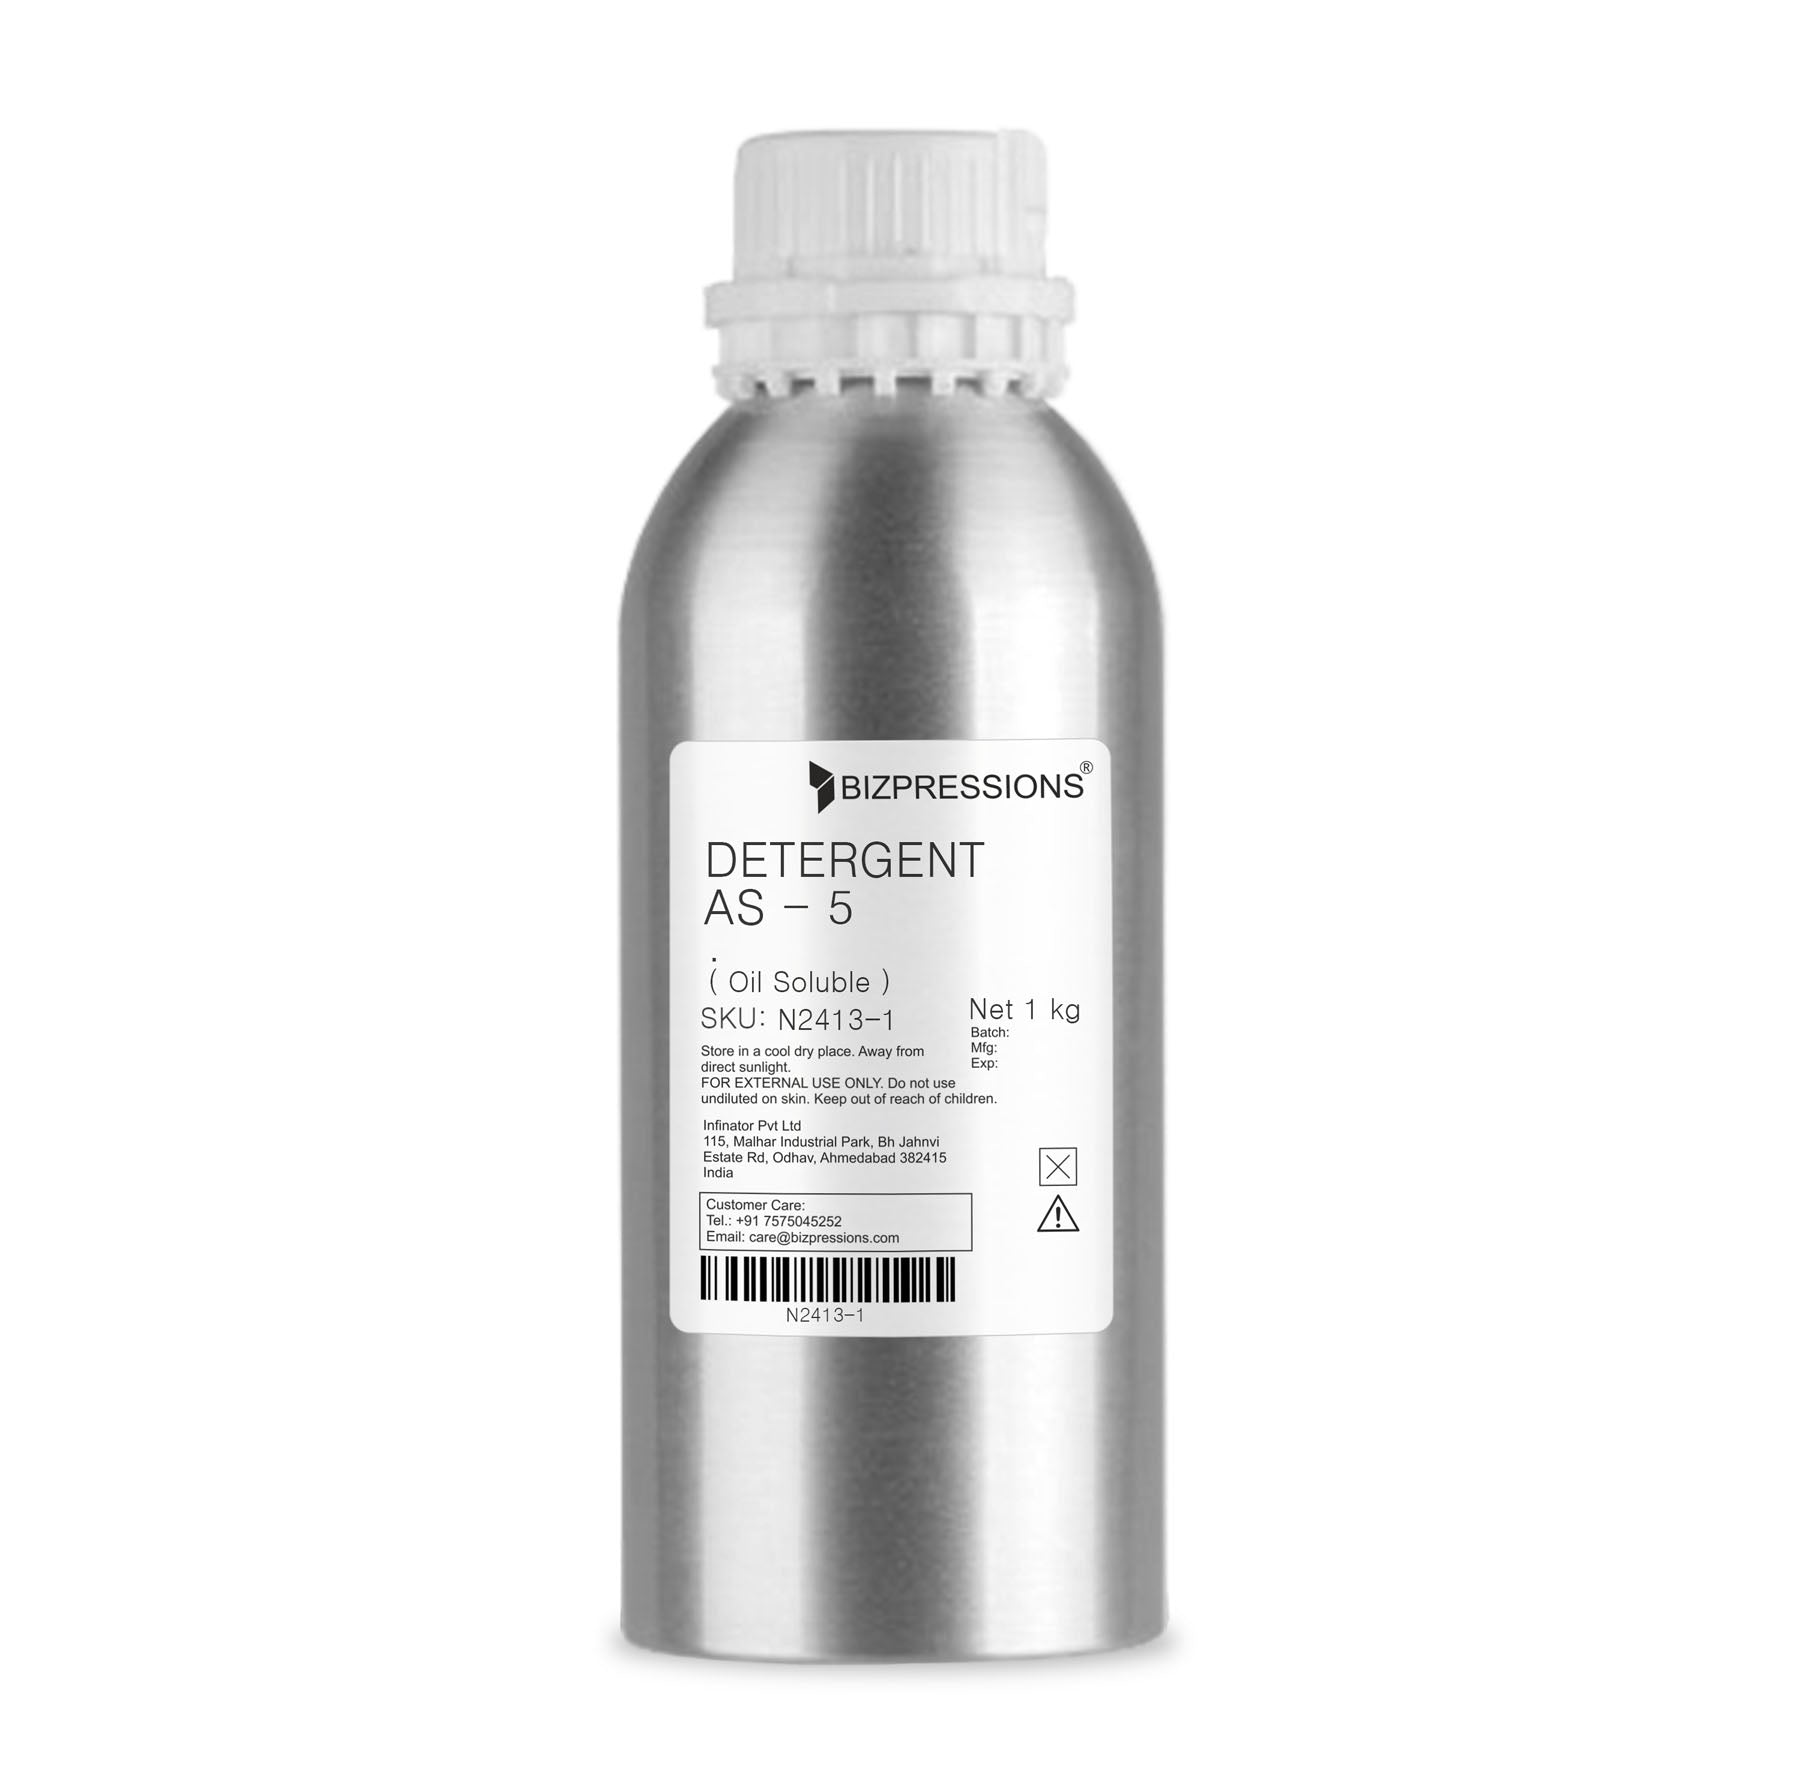 DETERGENT AS - 5 - Fragrance ( Oil Soluble ) - 1 kg